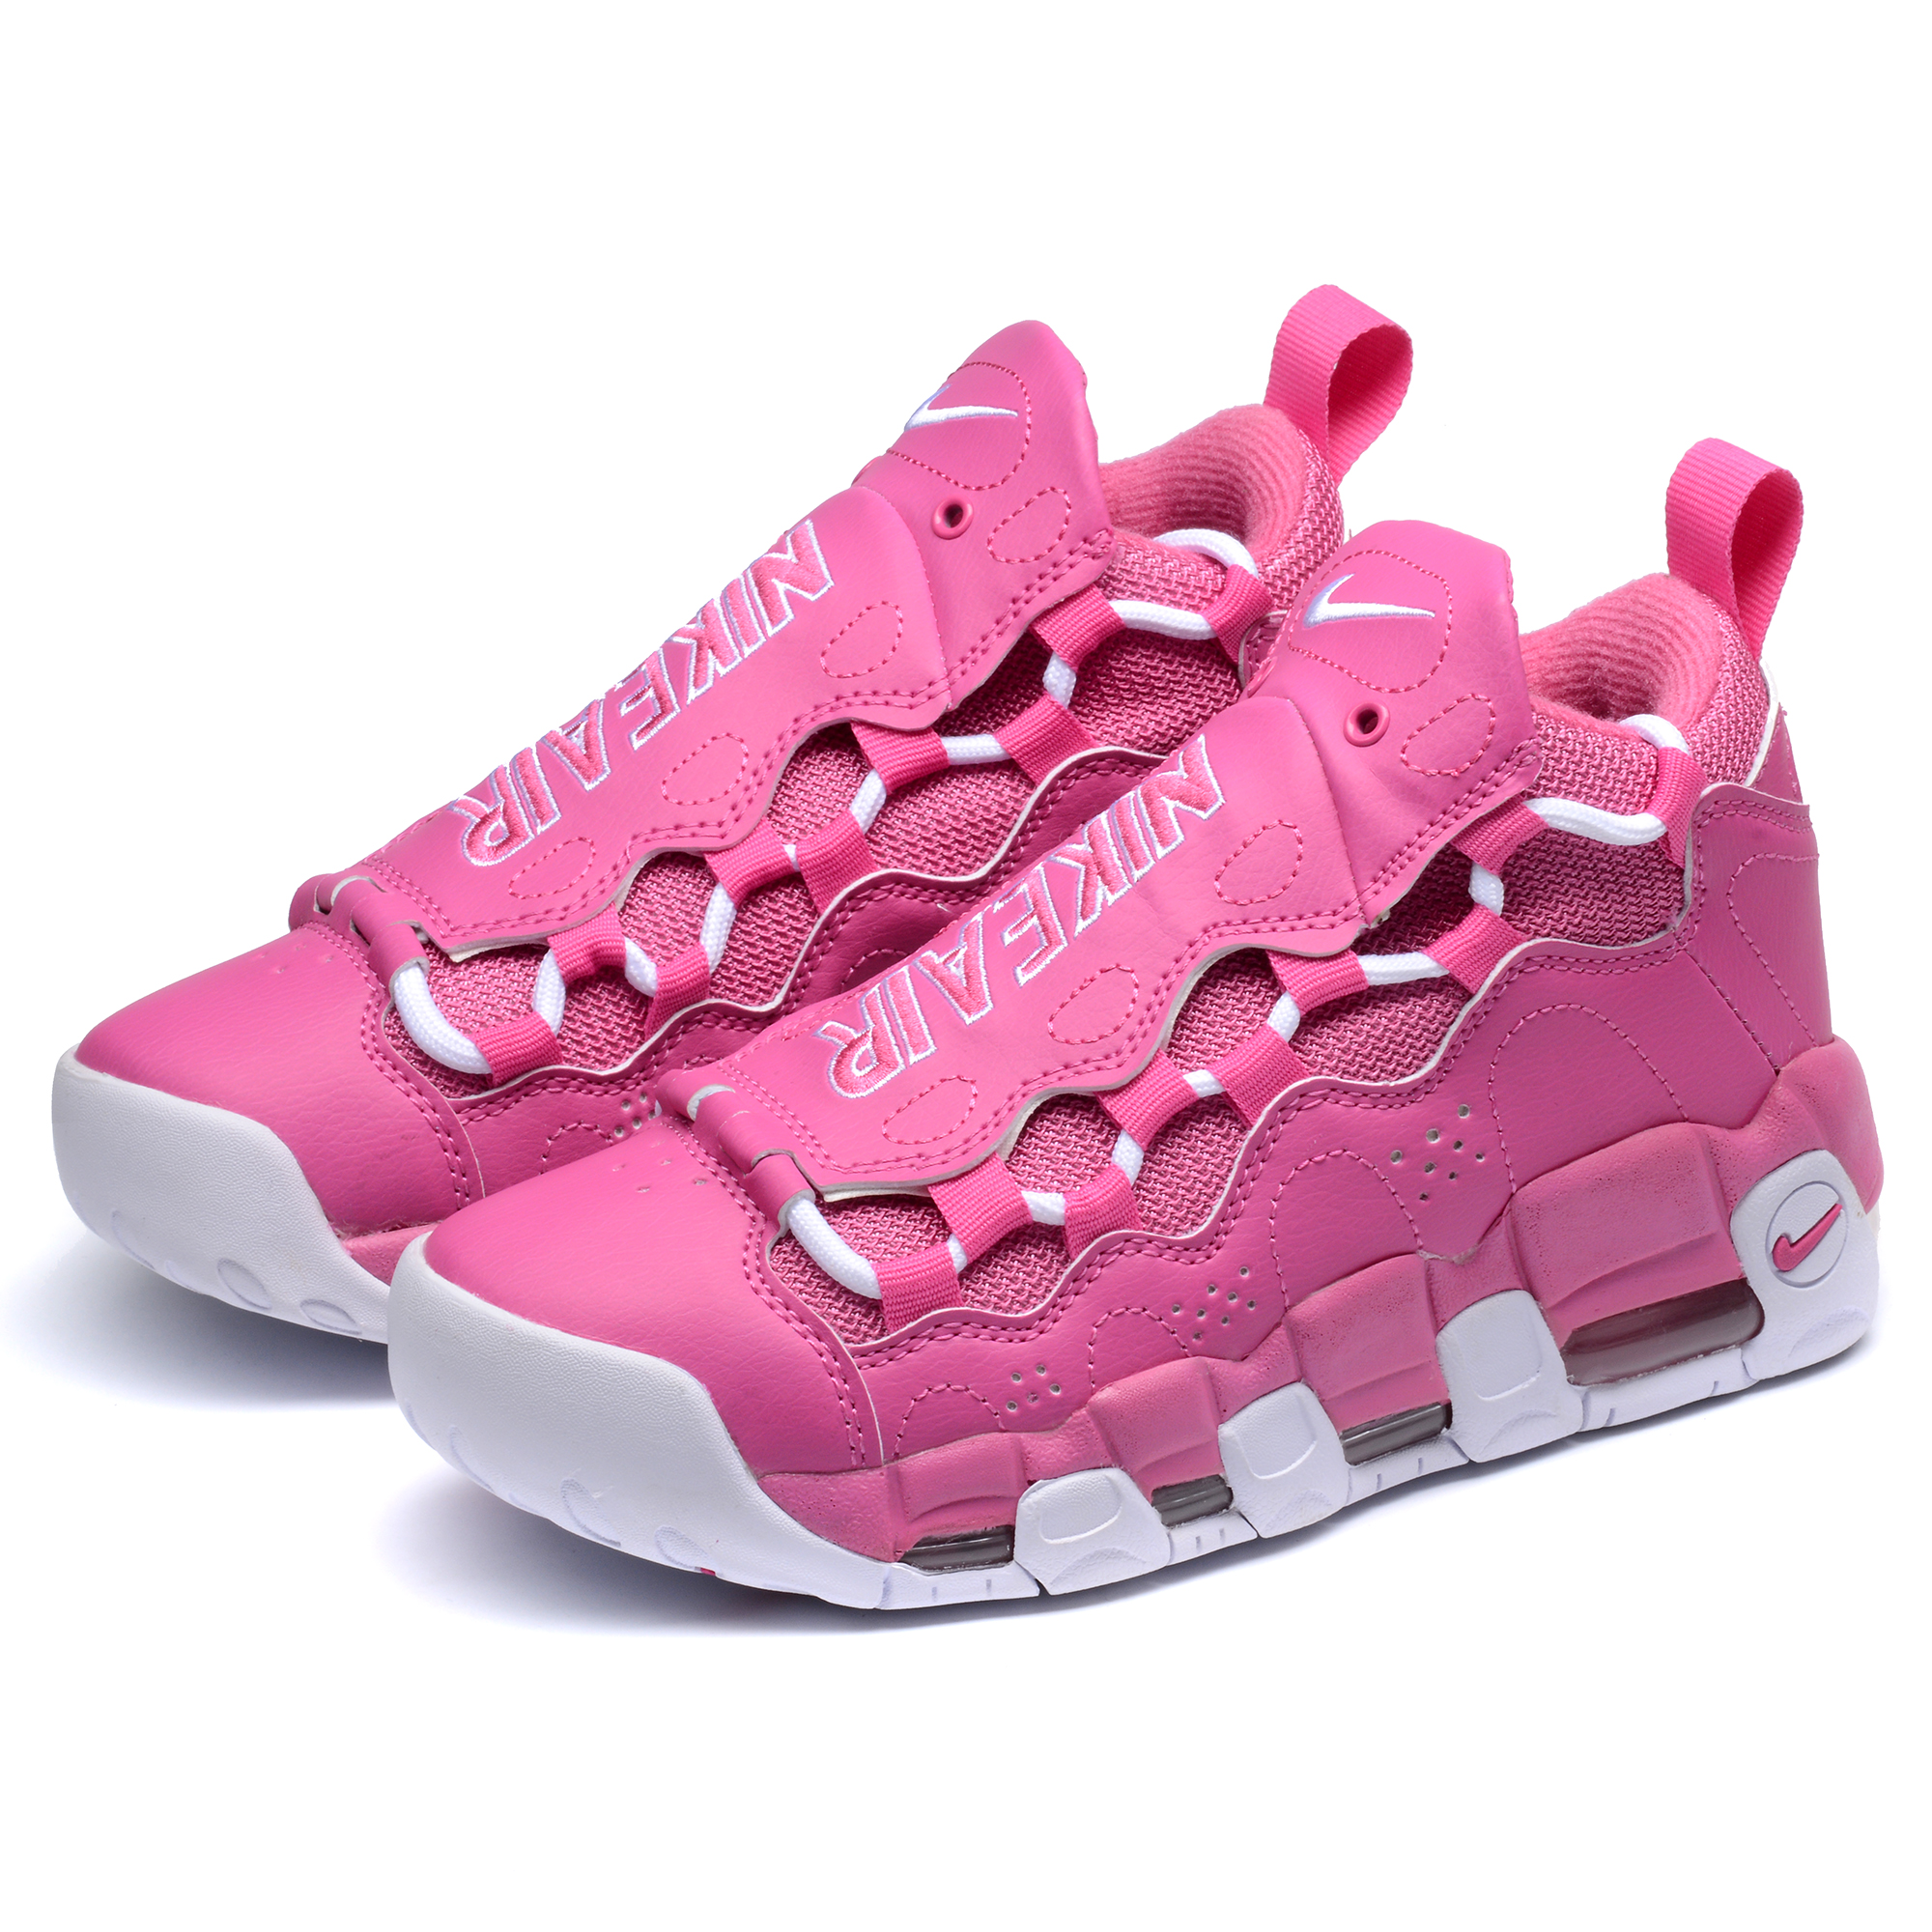 Men Nike Air More Money QS Pink White Shoes